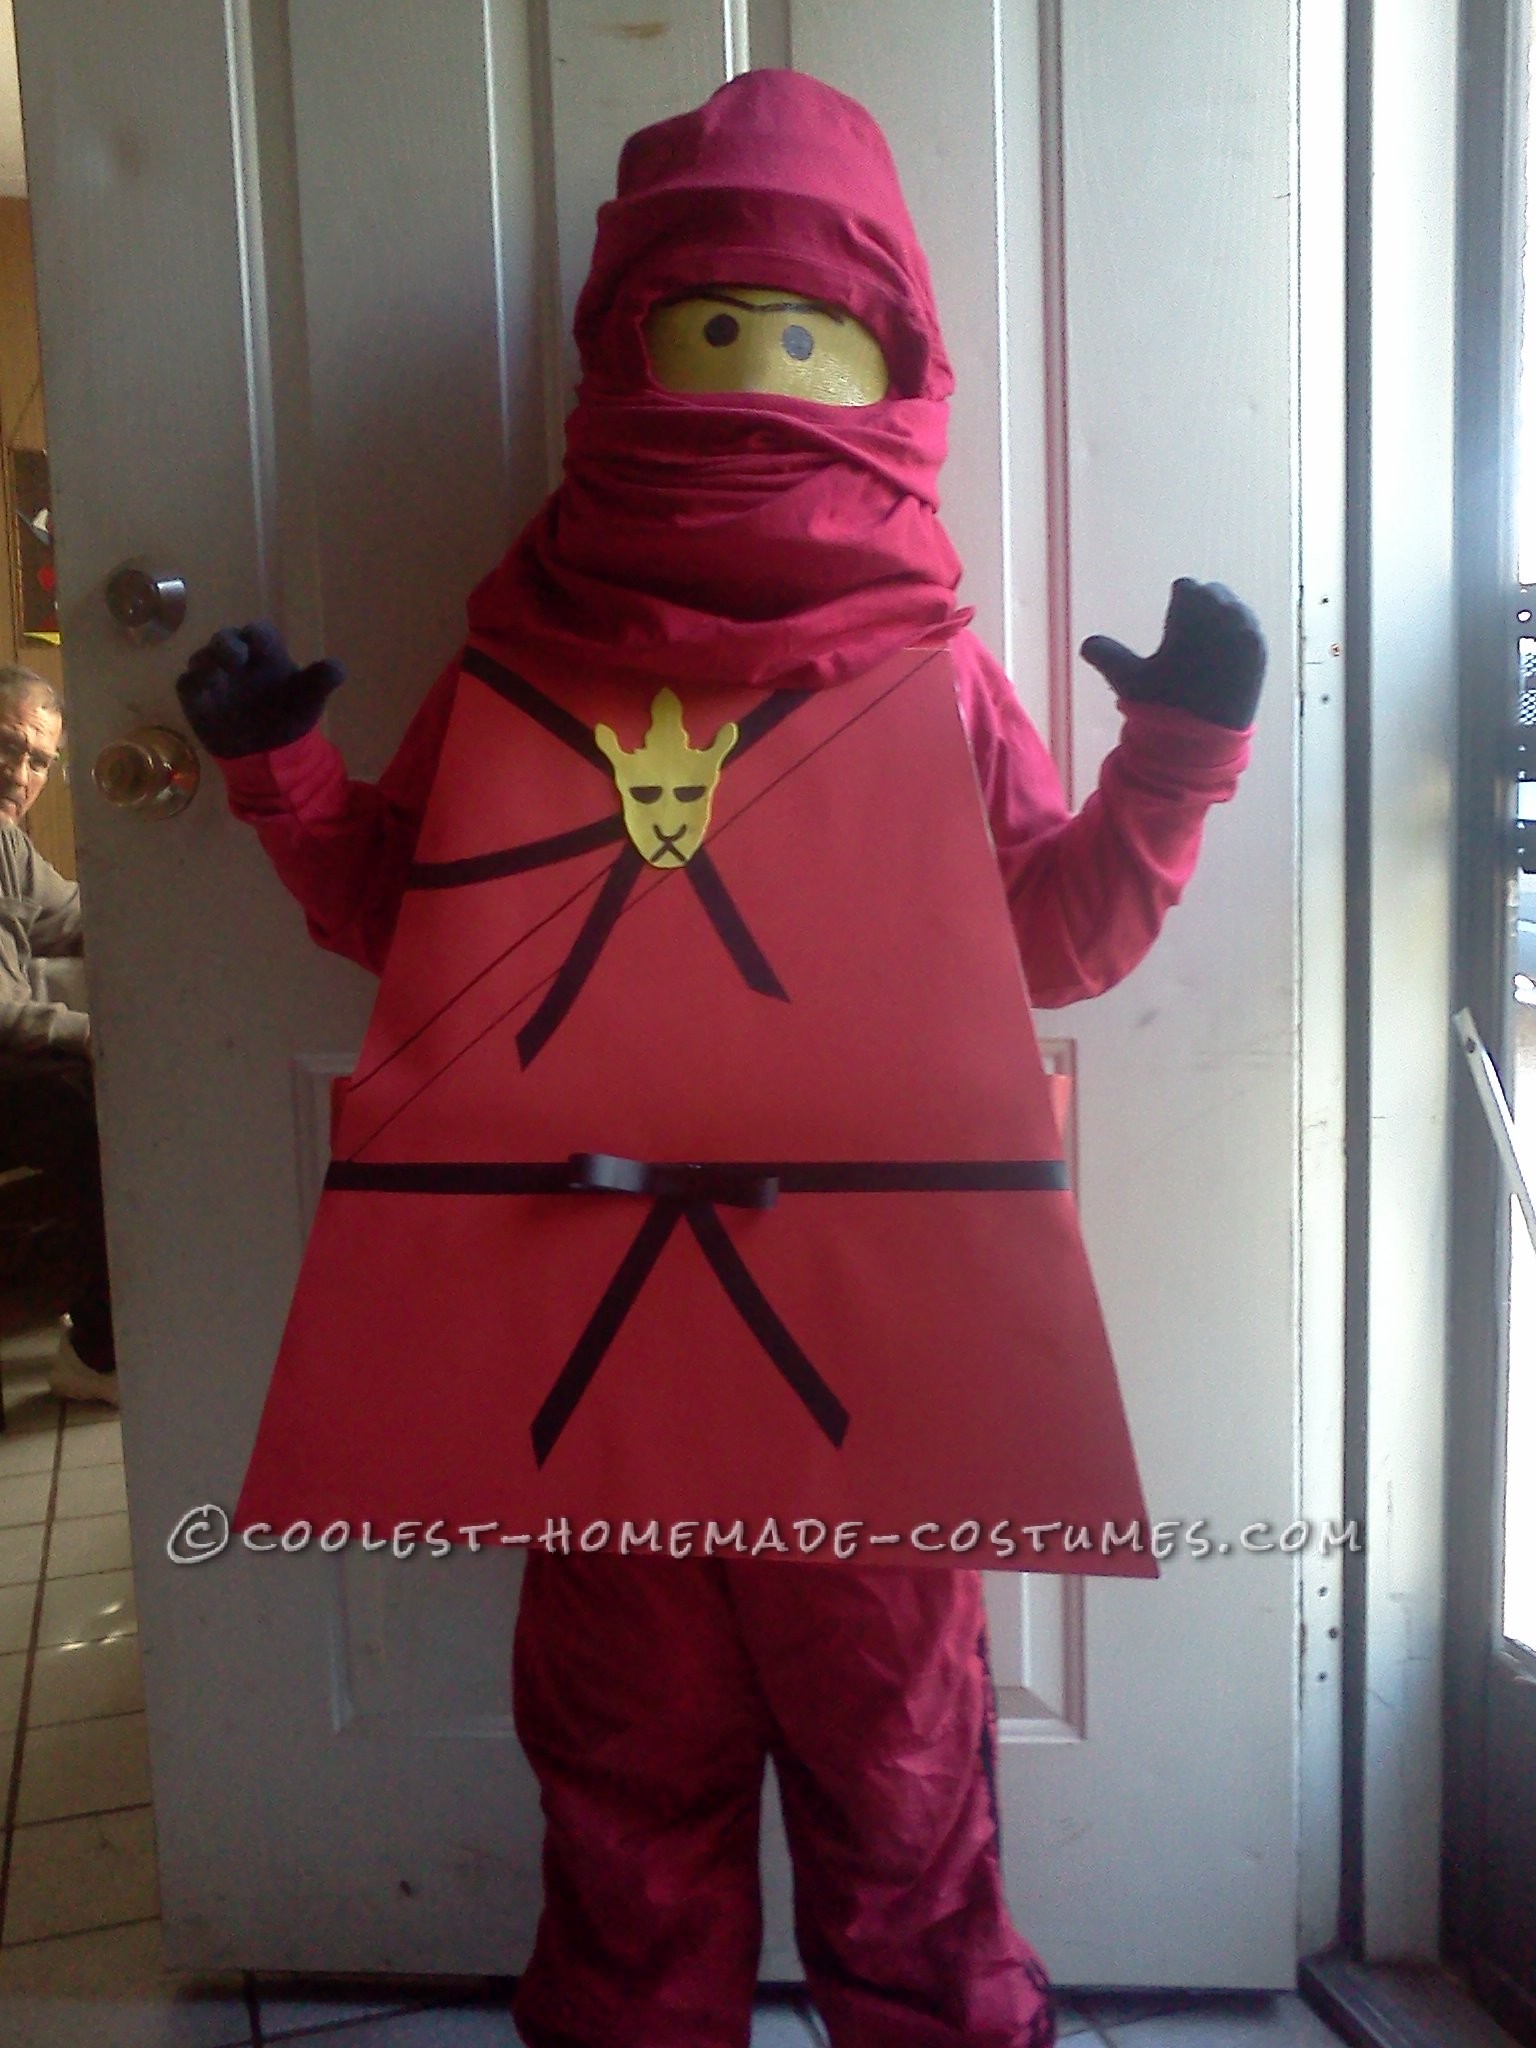 Cool Homemade Red Ninjago Minifigure Costume